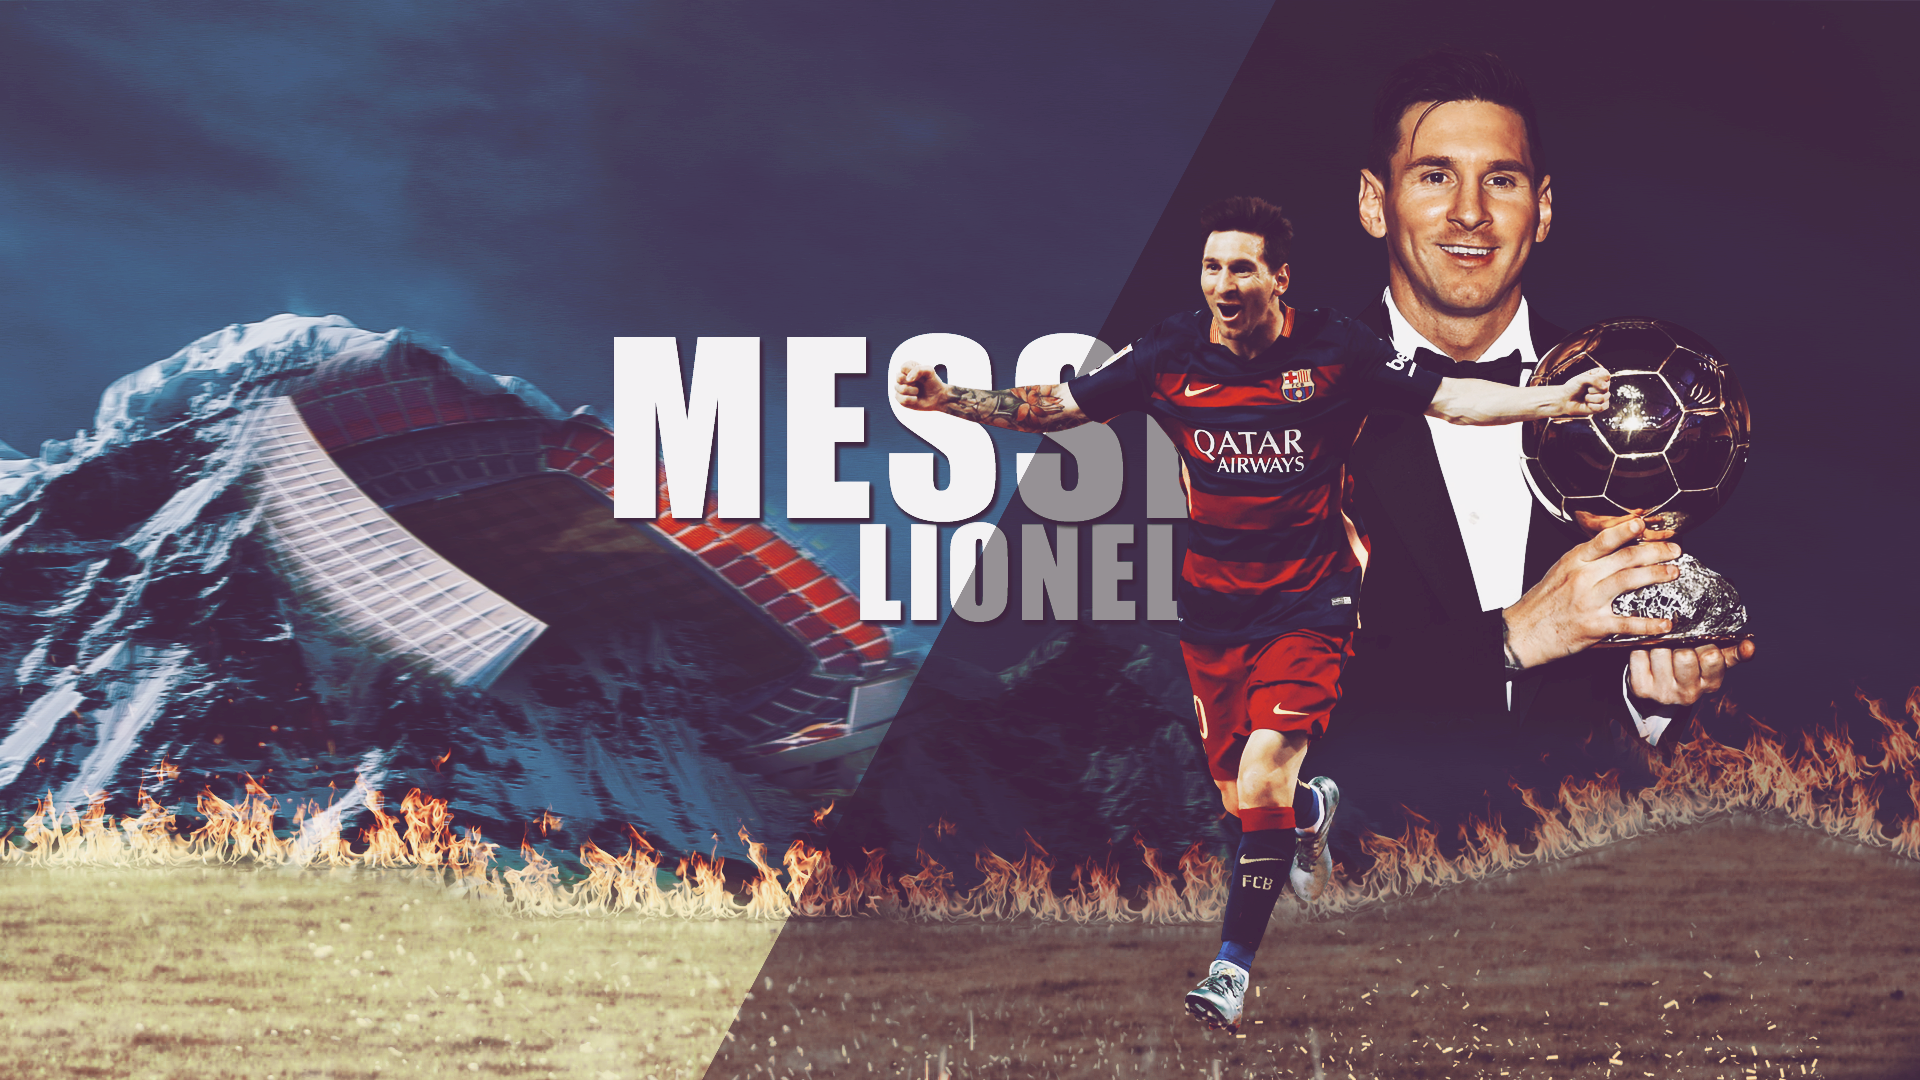 Lionel Messi Balon D Or Winner HD Wallpaper By